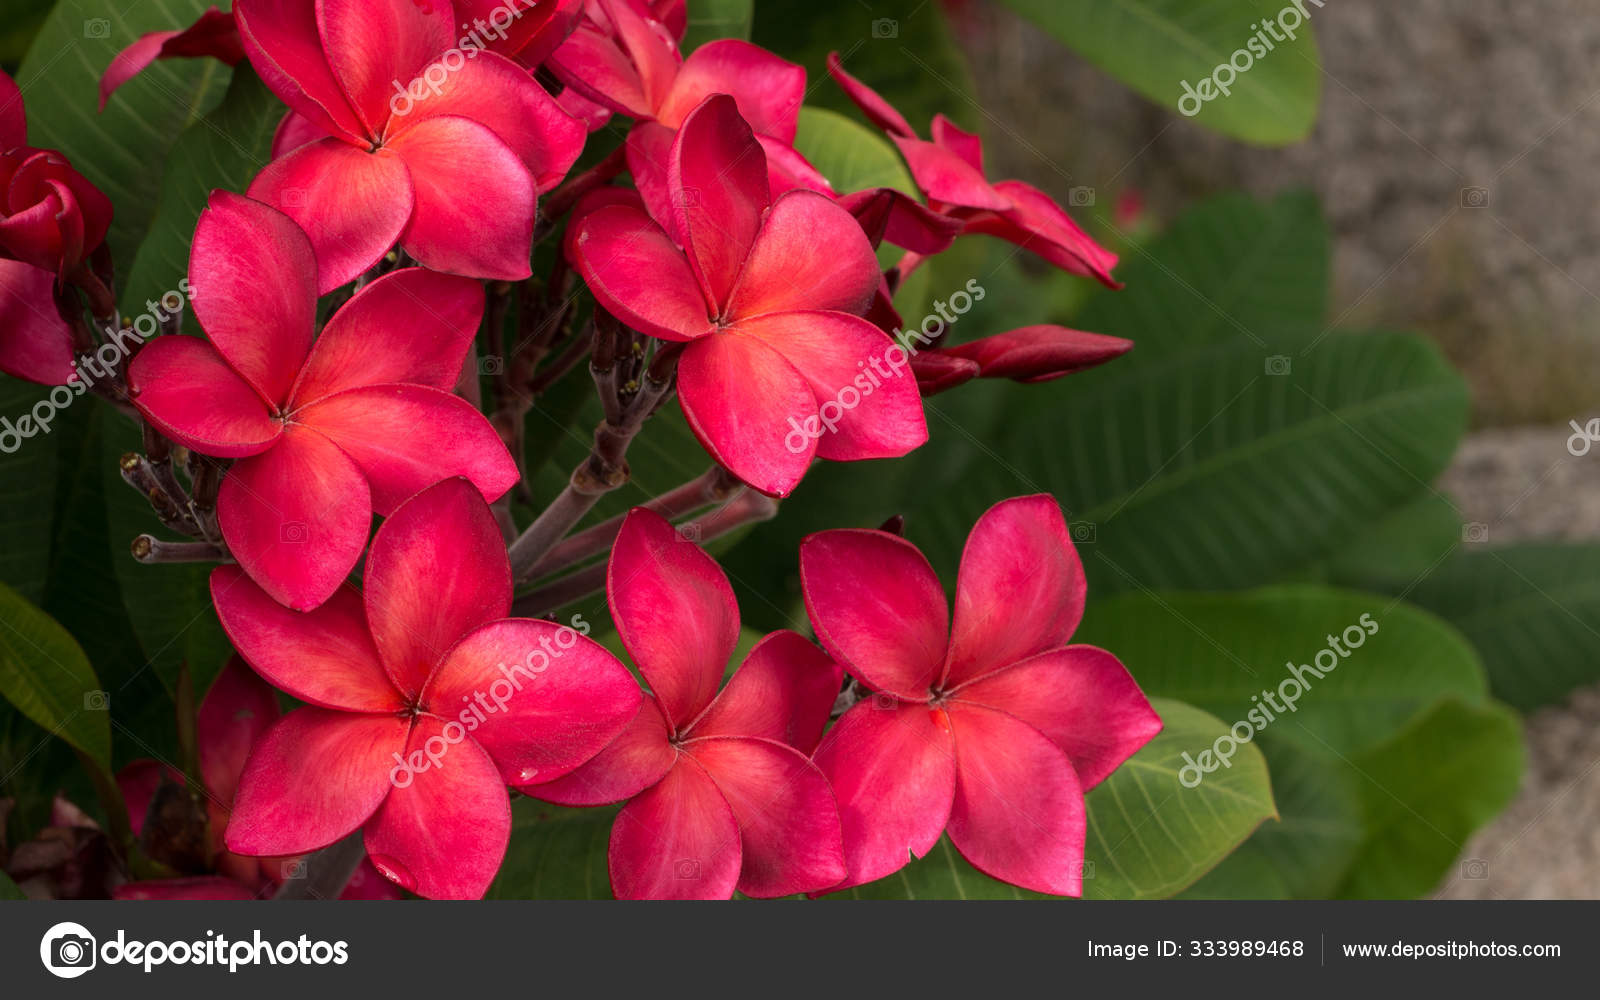 Bunch Of Red Frangipani Plumeria Flowers On Sunny Day Stock Photo C Galeja 333989468